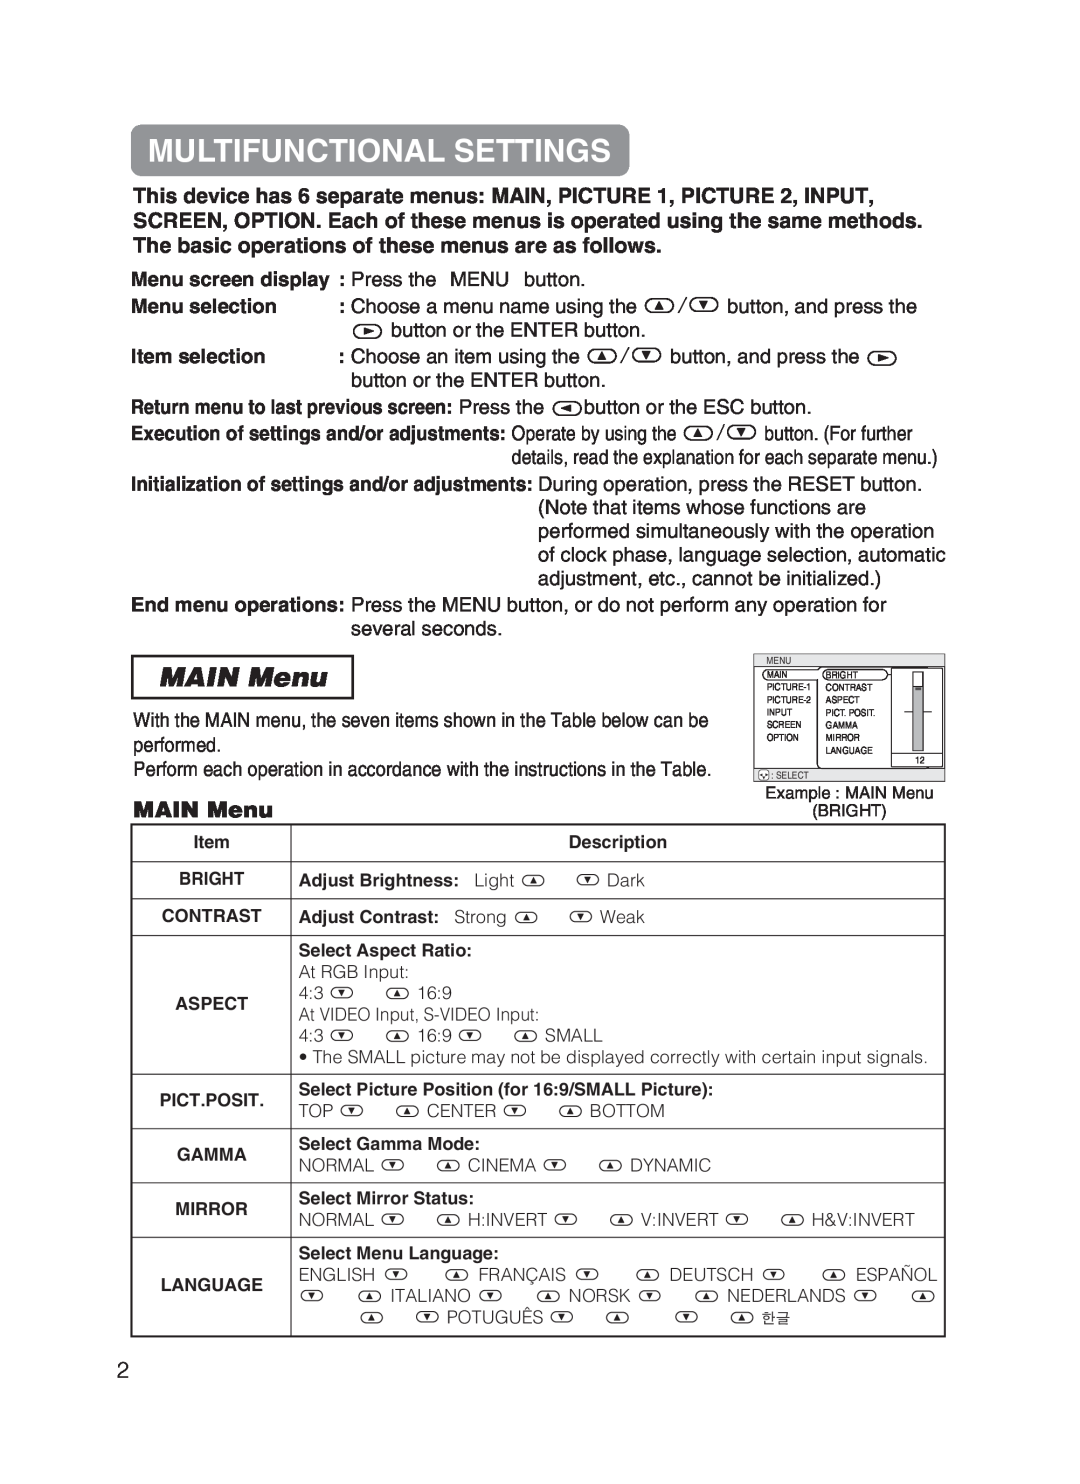 Dukane 8755B user manual Multifunctional Settings, MAIN Menu 